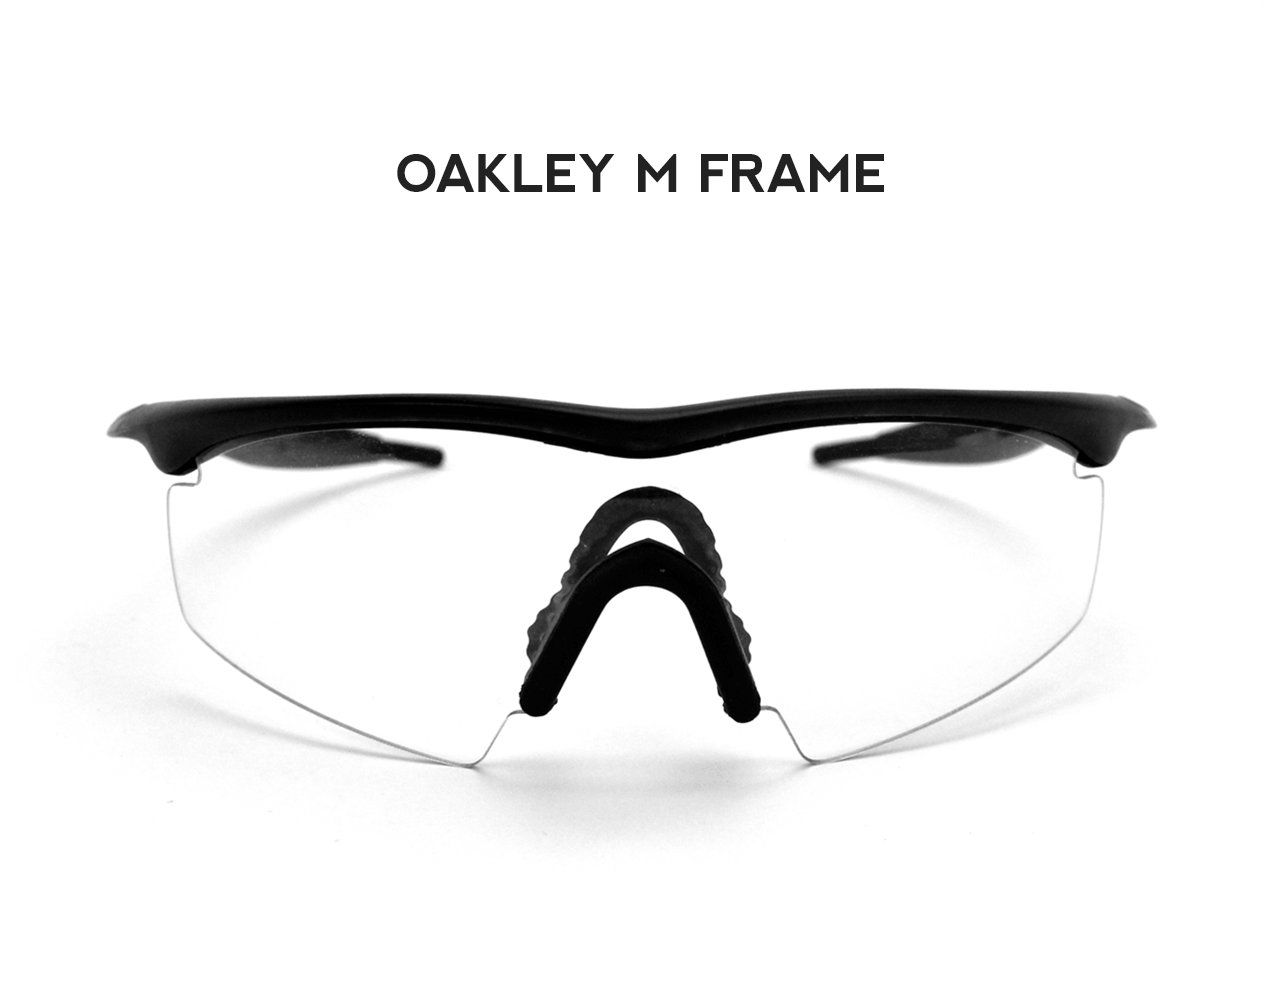 Arriba 89+ imagen authentic oakley m frame lenses - Abzlocal.mx